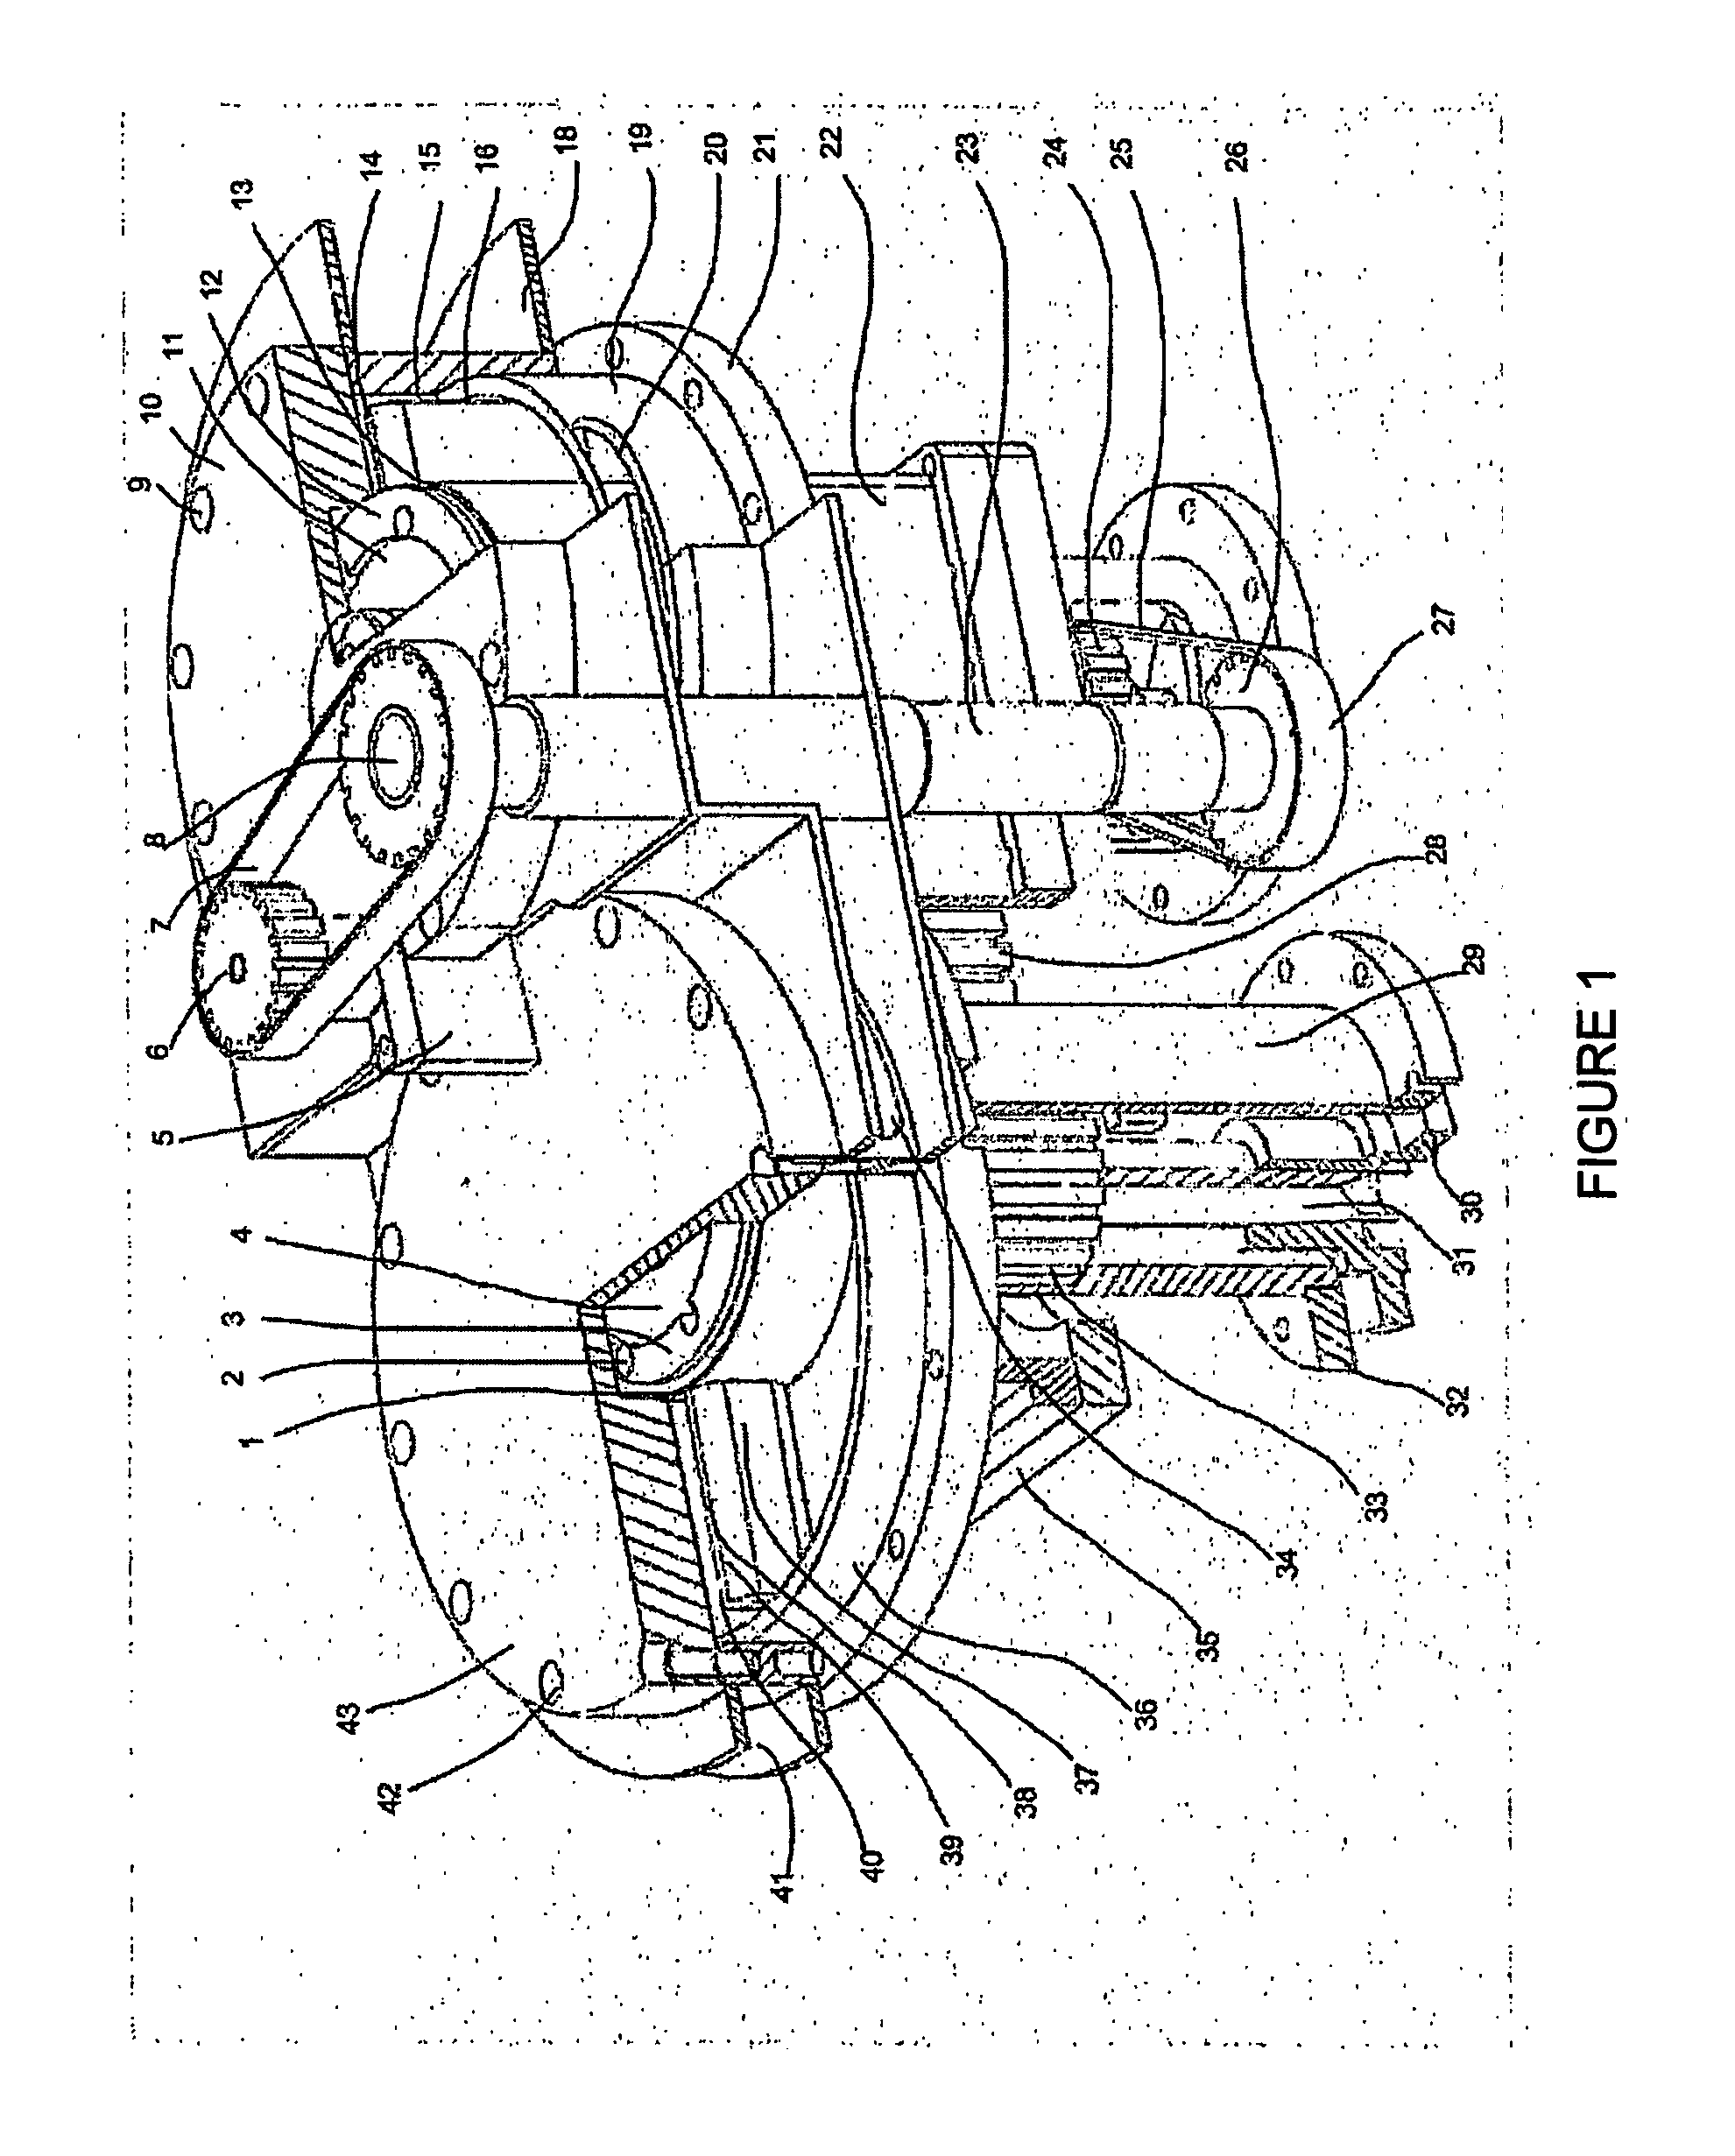 Rotary vane engine and thermodynamic cycle